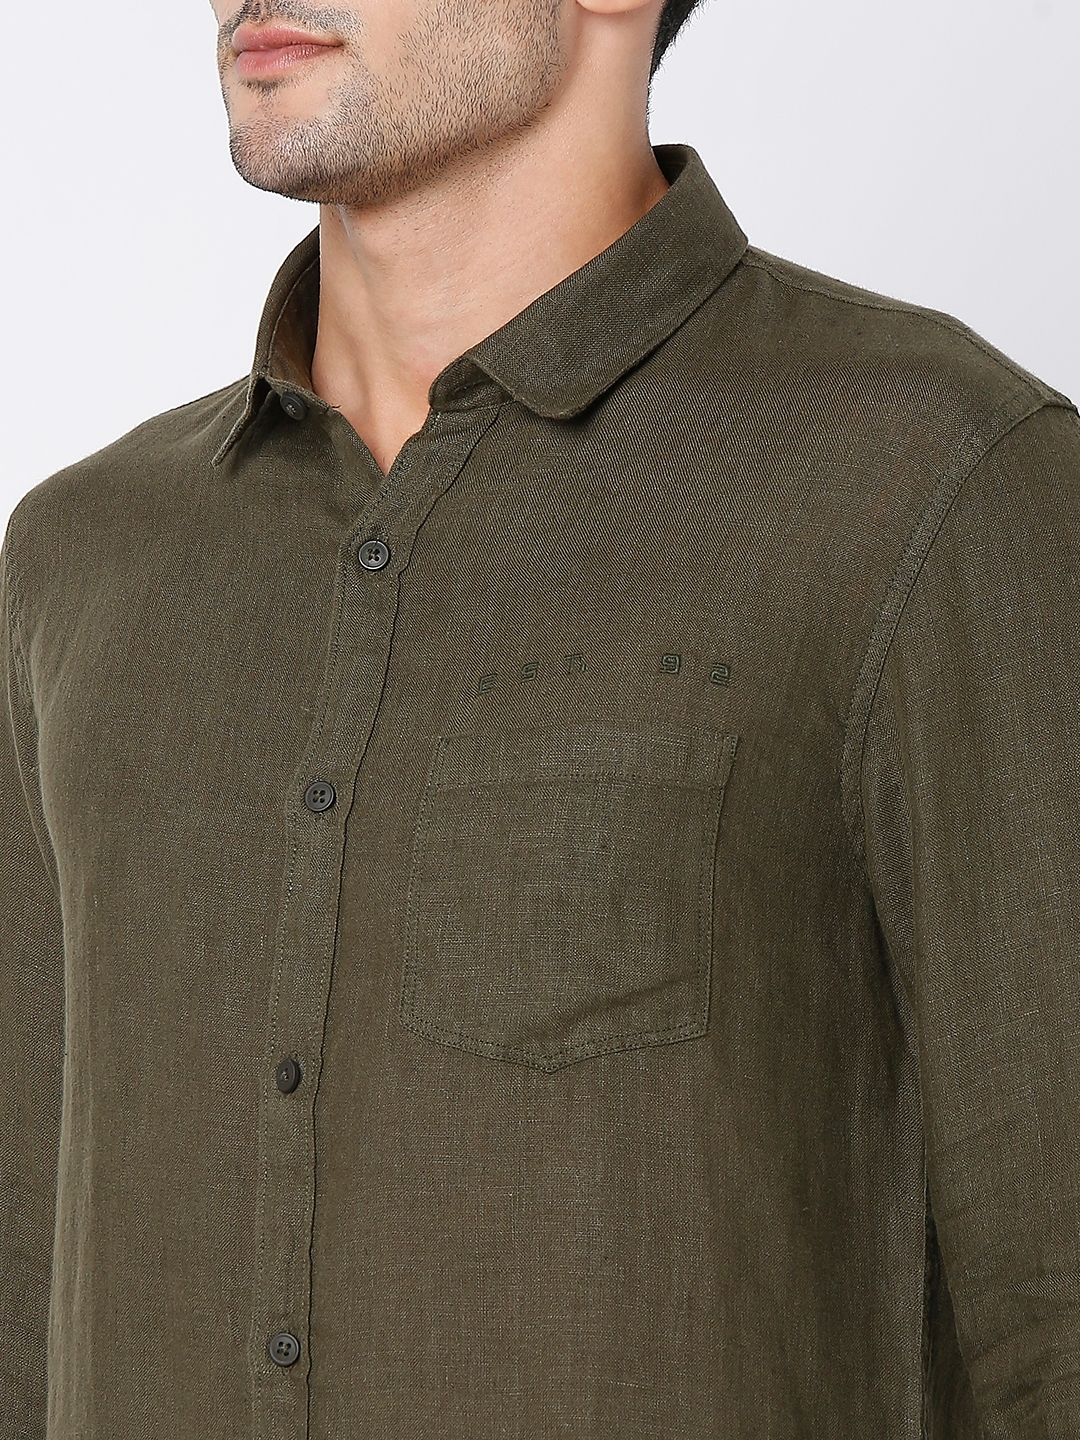 spykar | Men's Green Cotton  Casual Shirts 4